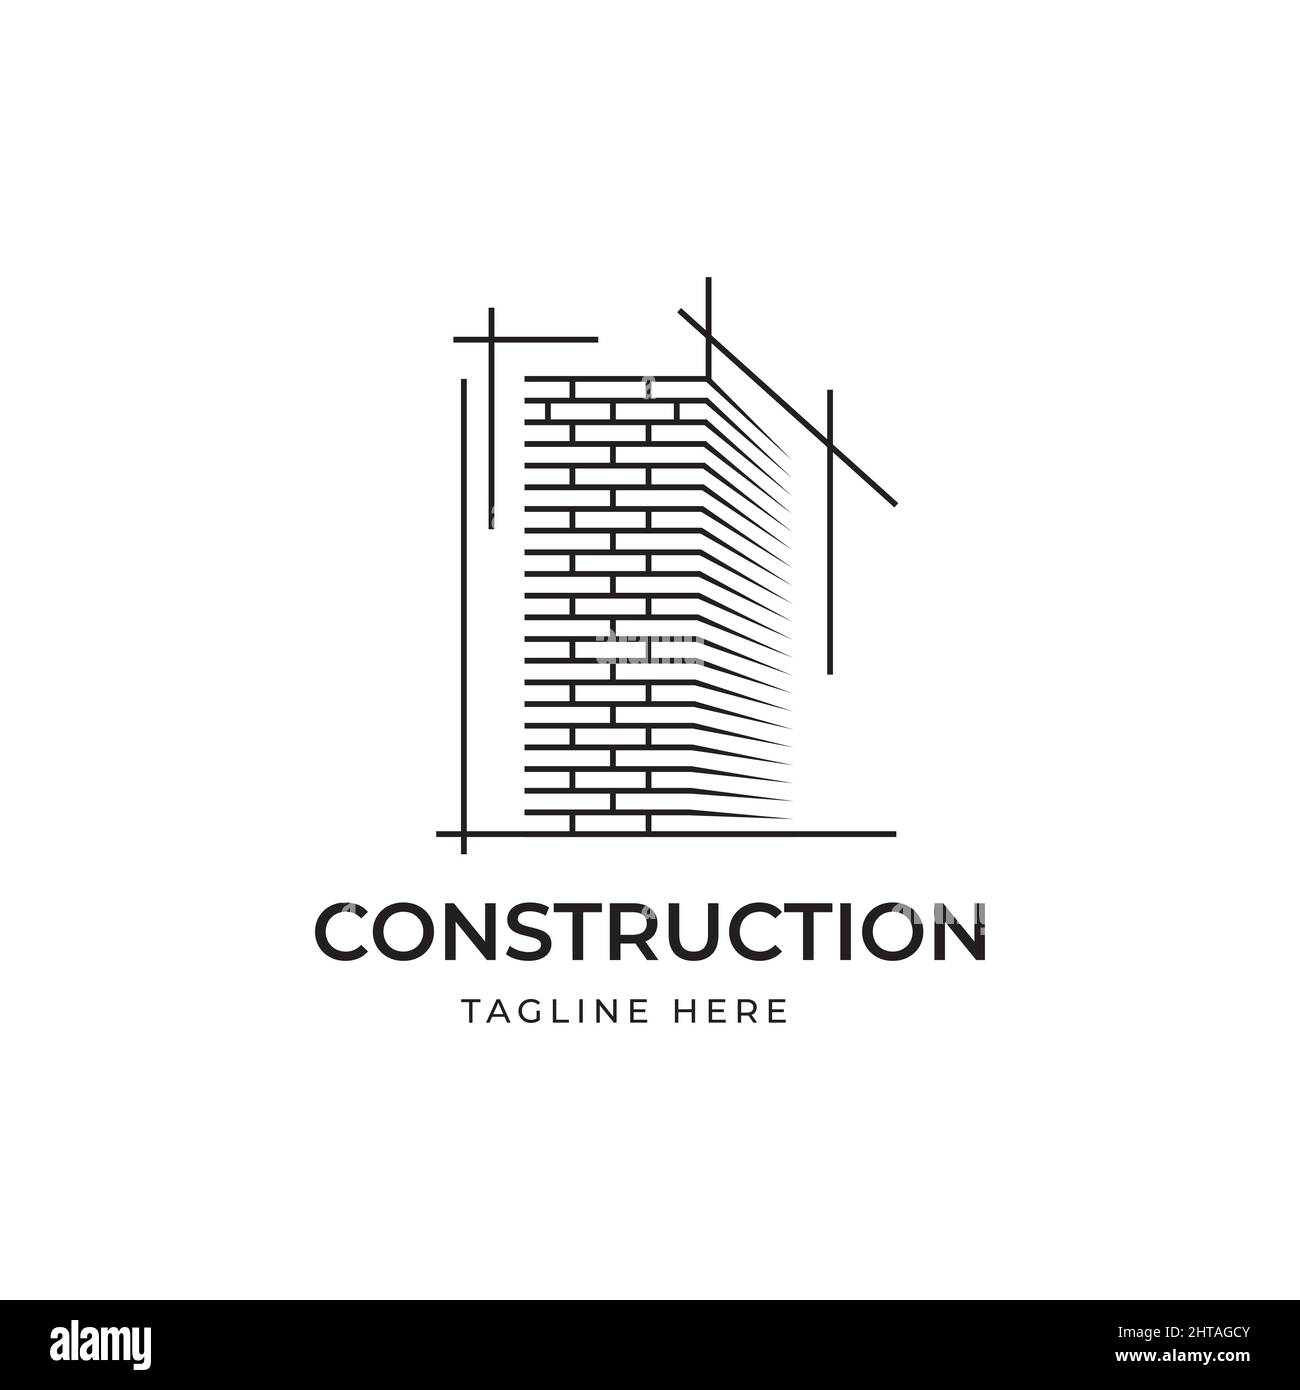 Construction logo design illustration vector template Stock Vector